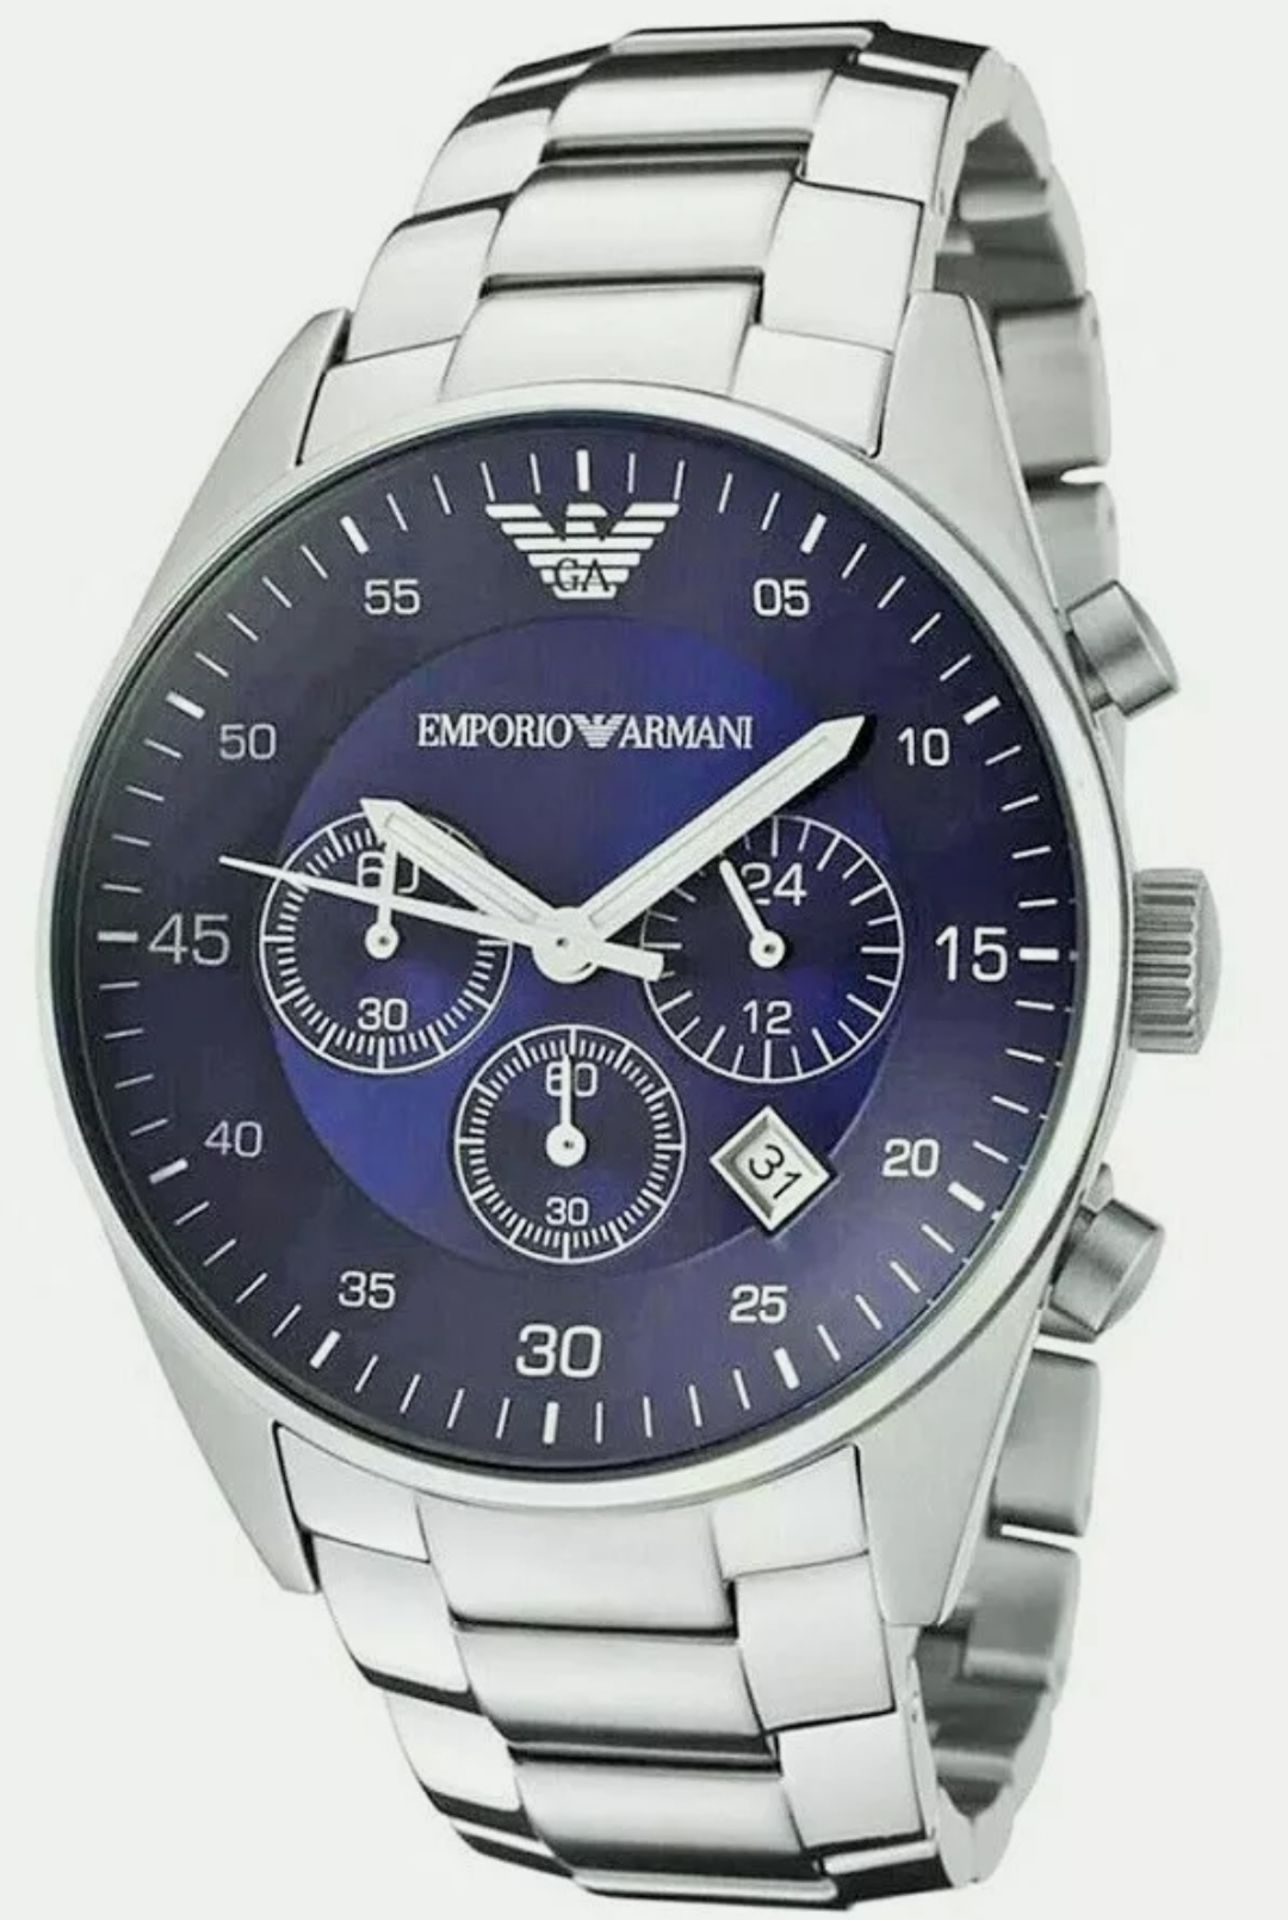 Emporio Armani AR5860 Quartz Men's Stainless Steel Chronograph Watch - Image 5 of 8